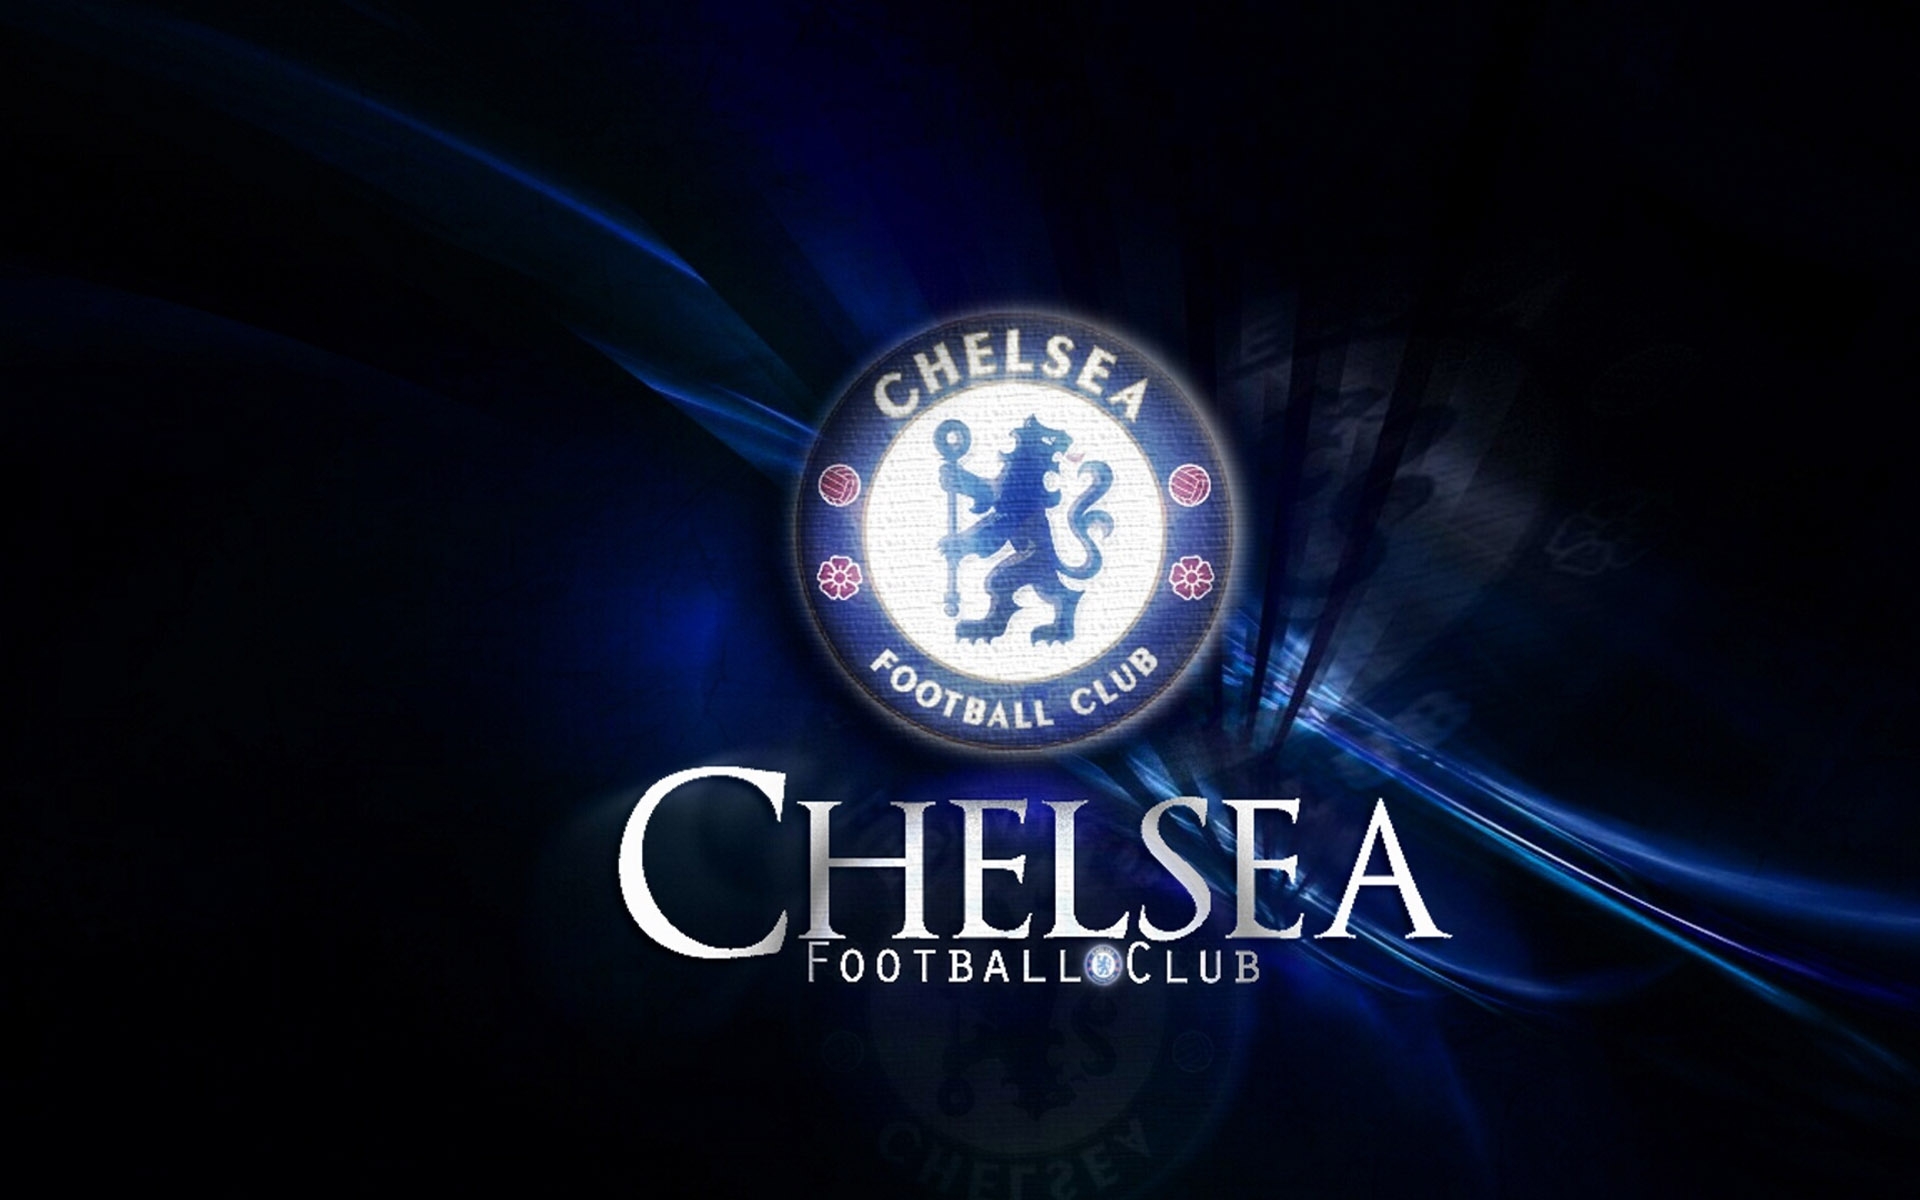 High Quality Chelsea Football Club Wallpaper Full HD